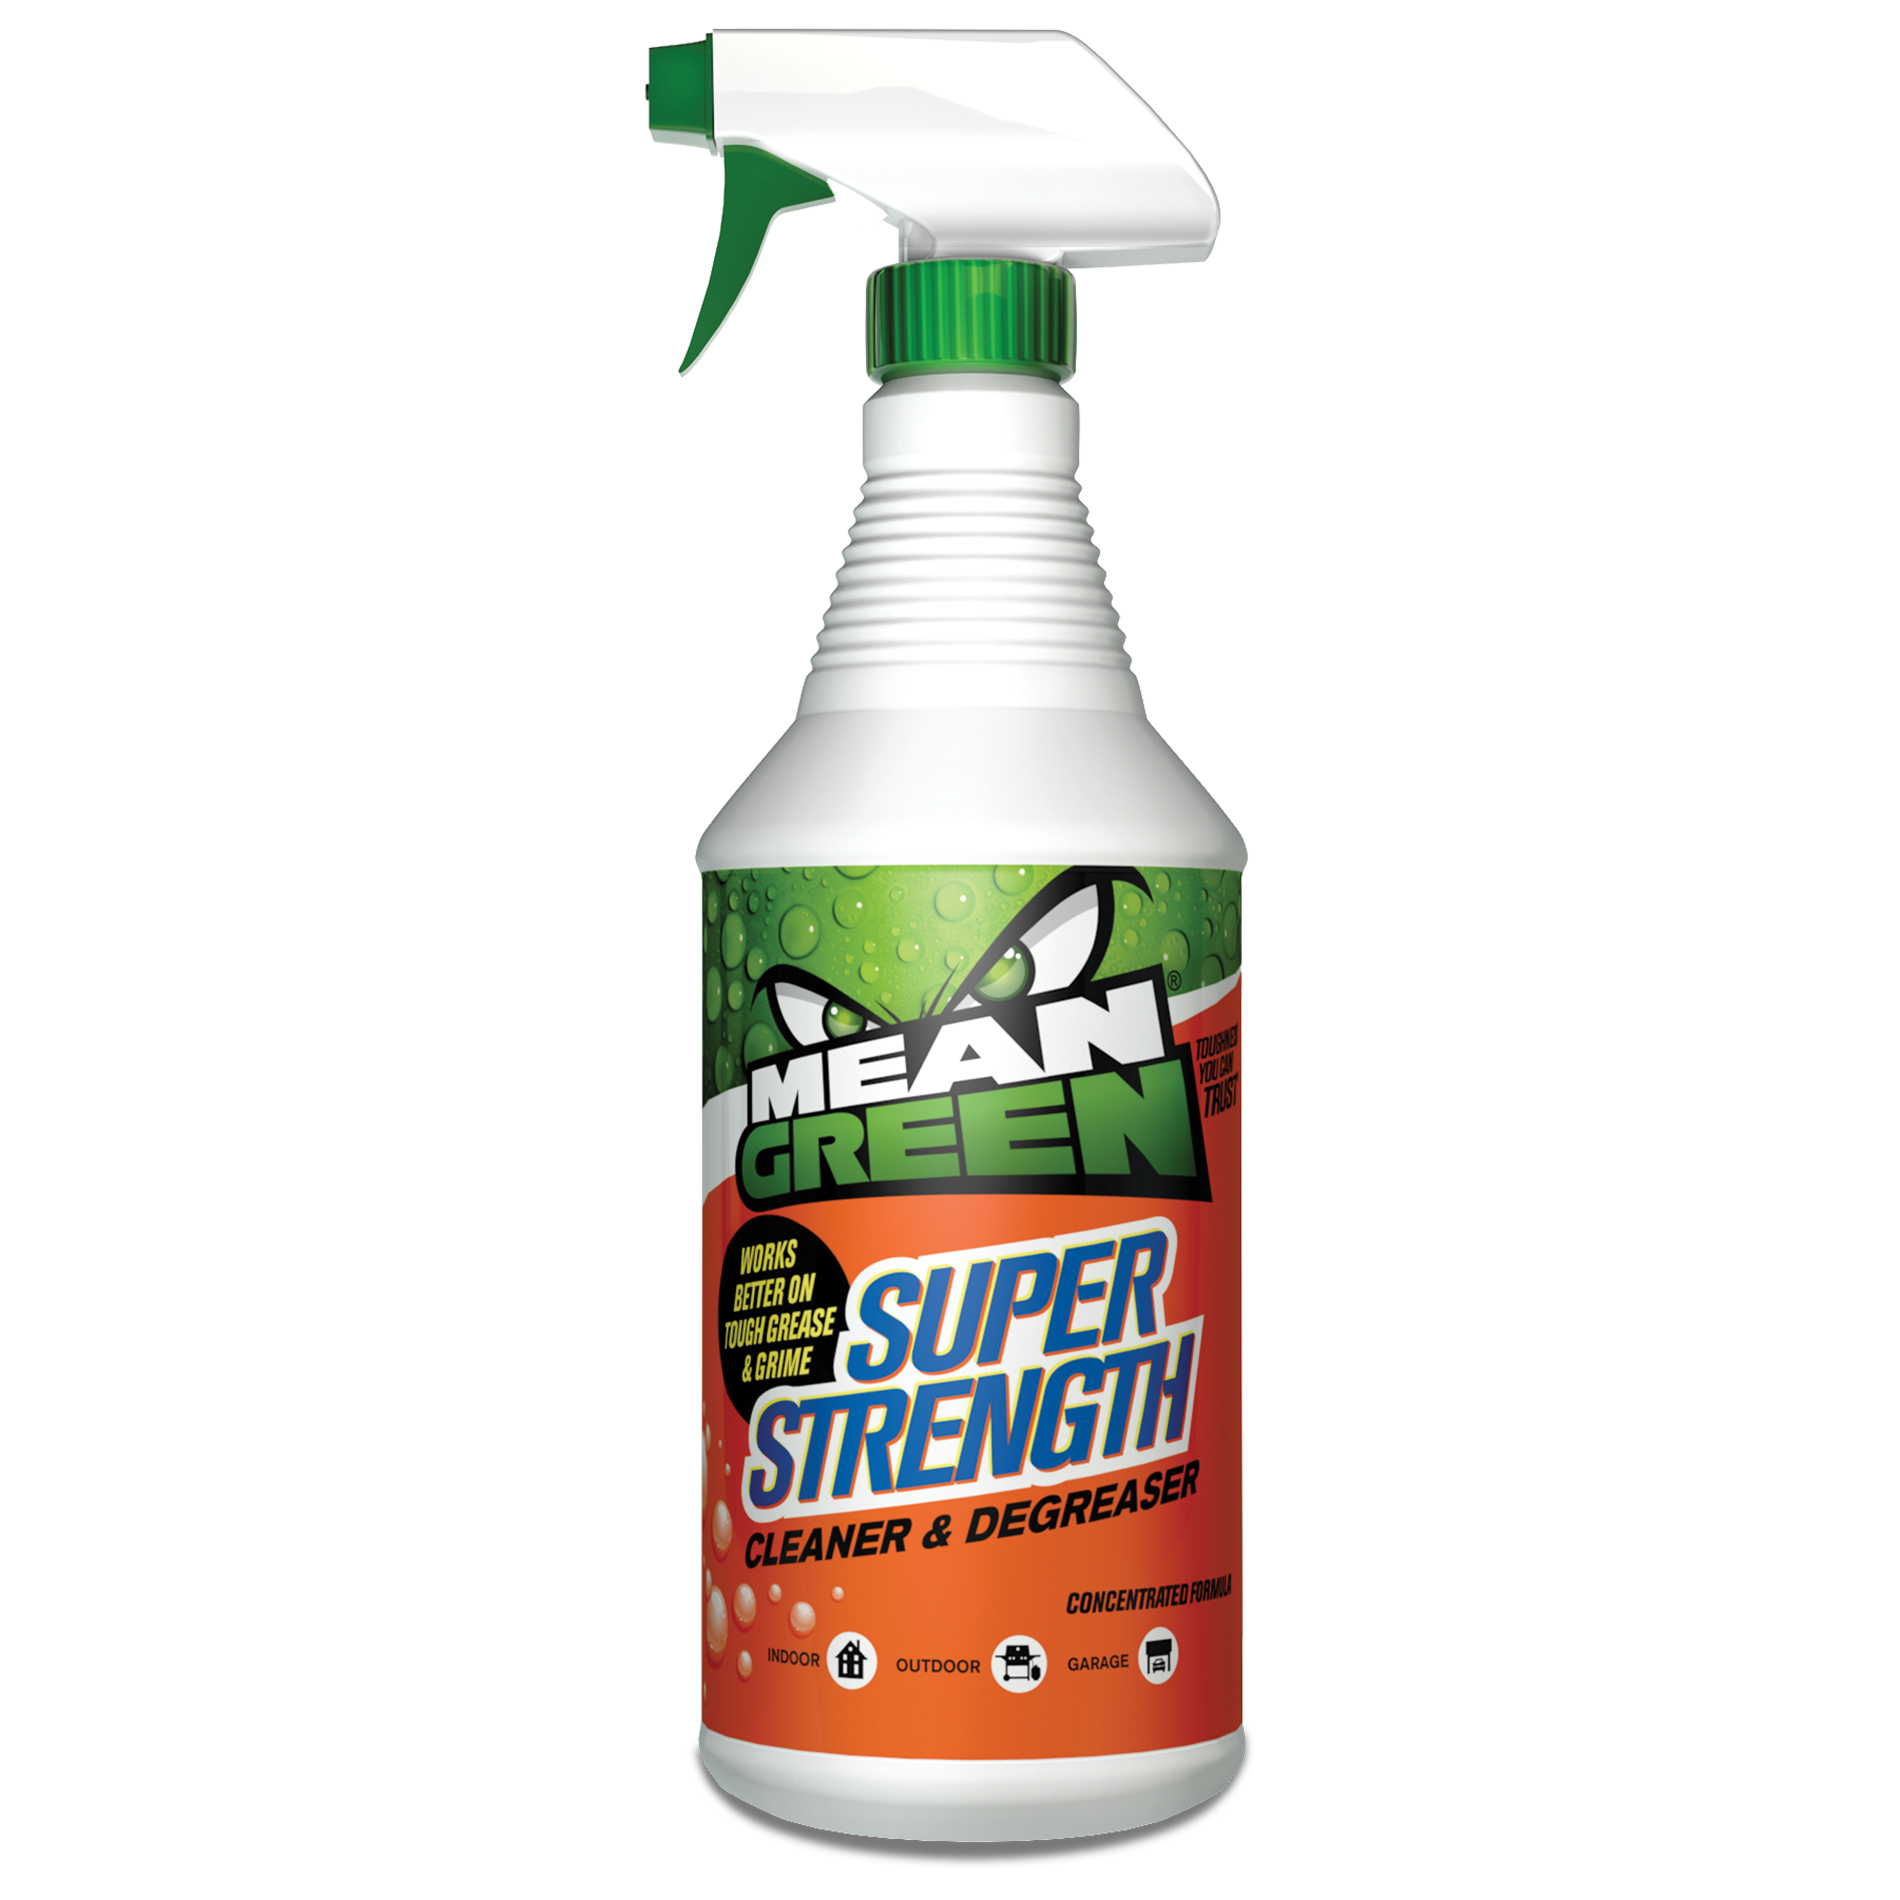 Mean Green Super Strength Cleaner & Degreaser, 32 oz